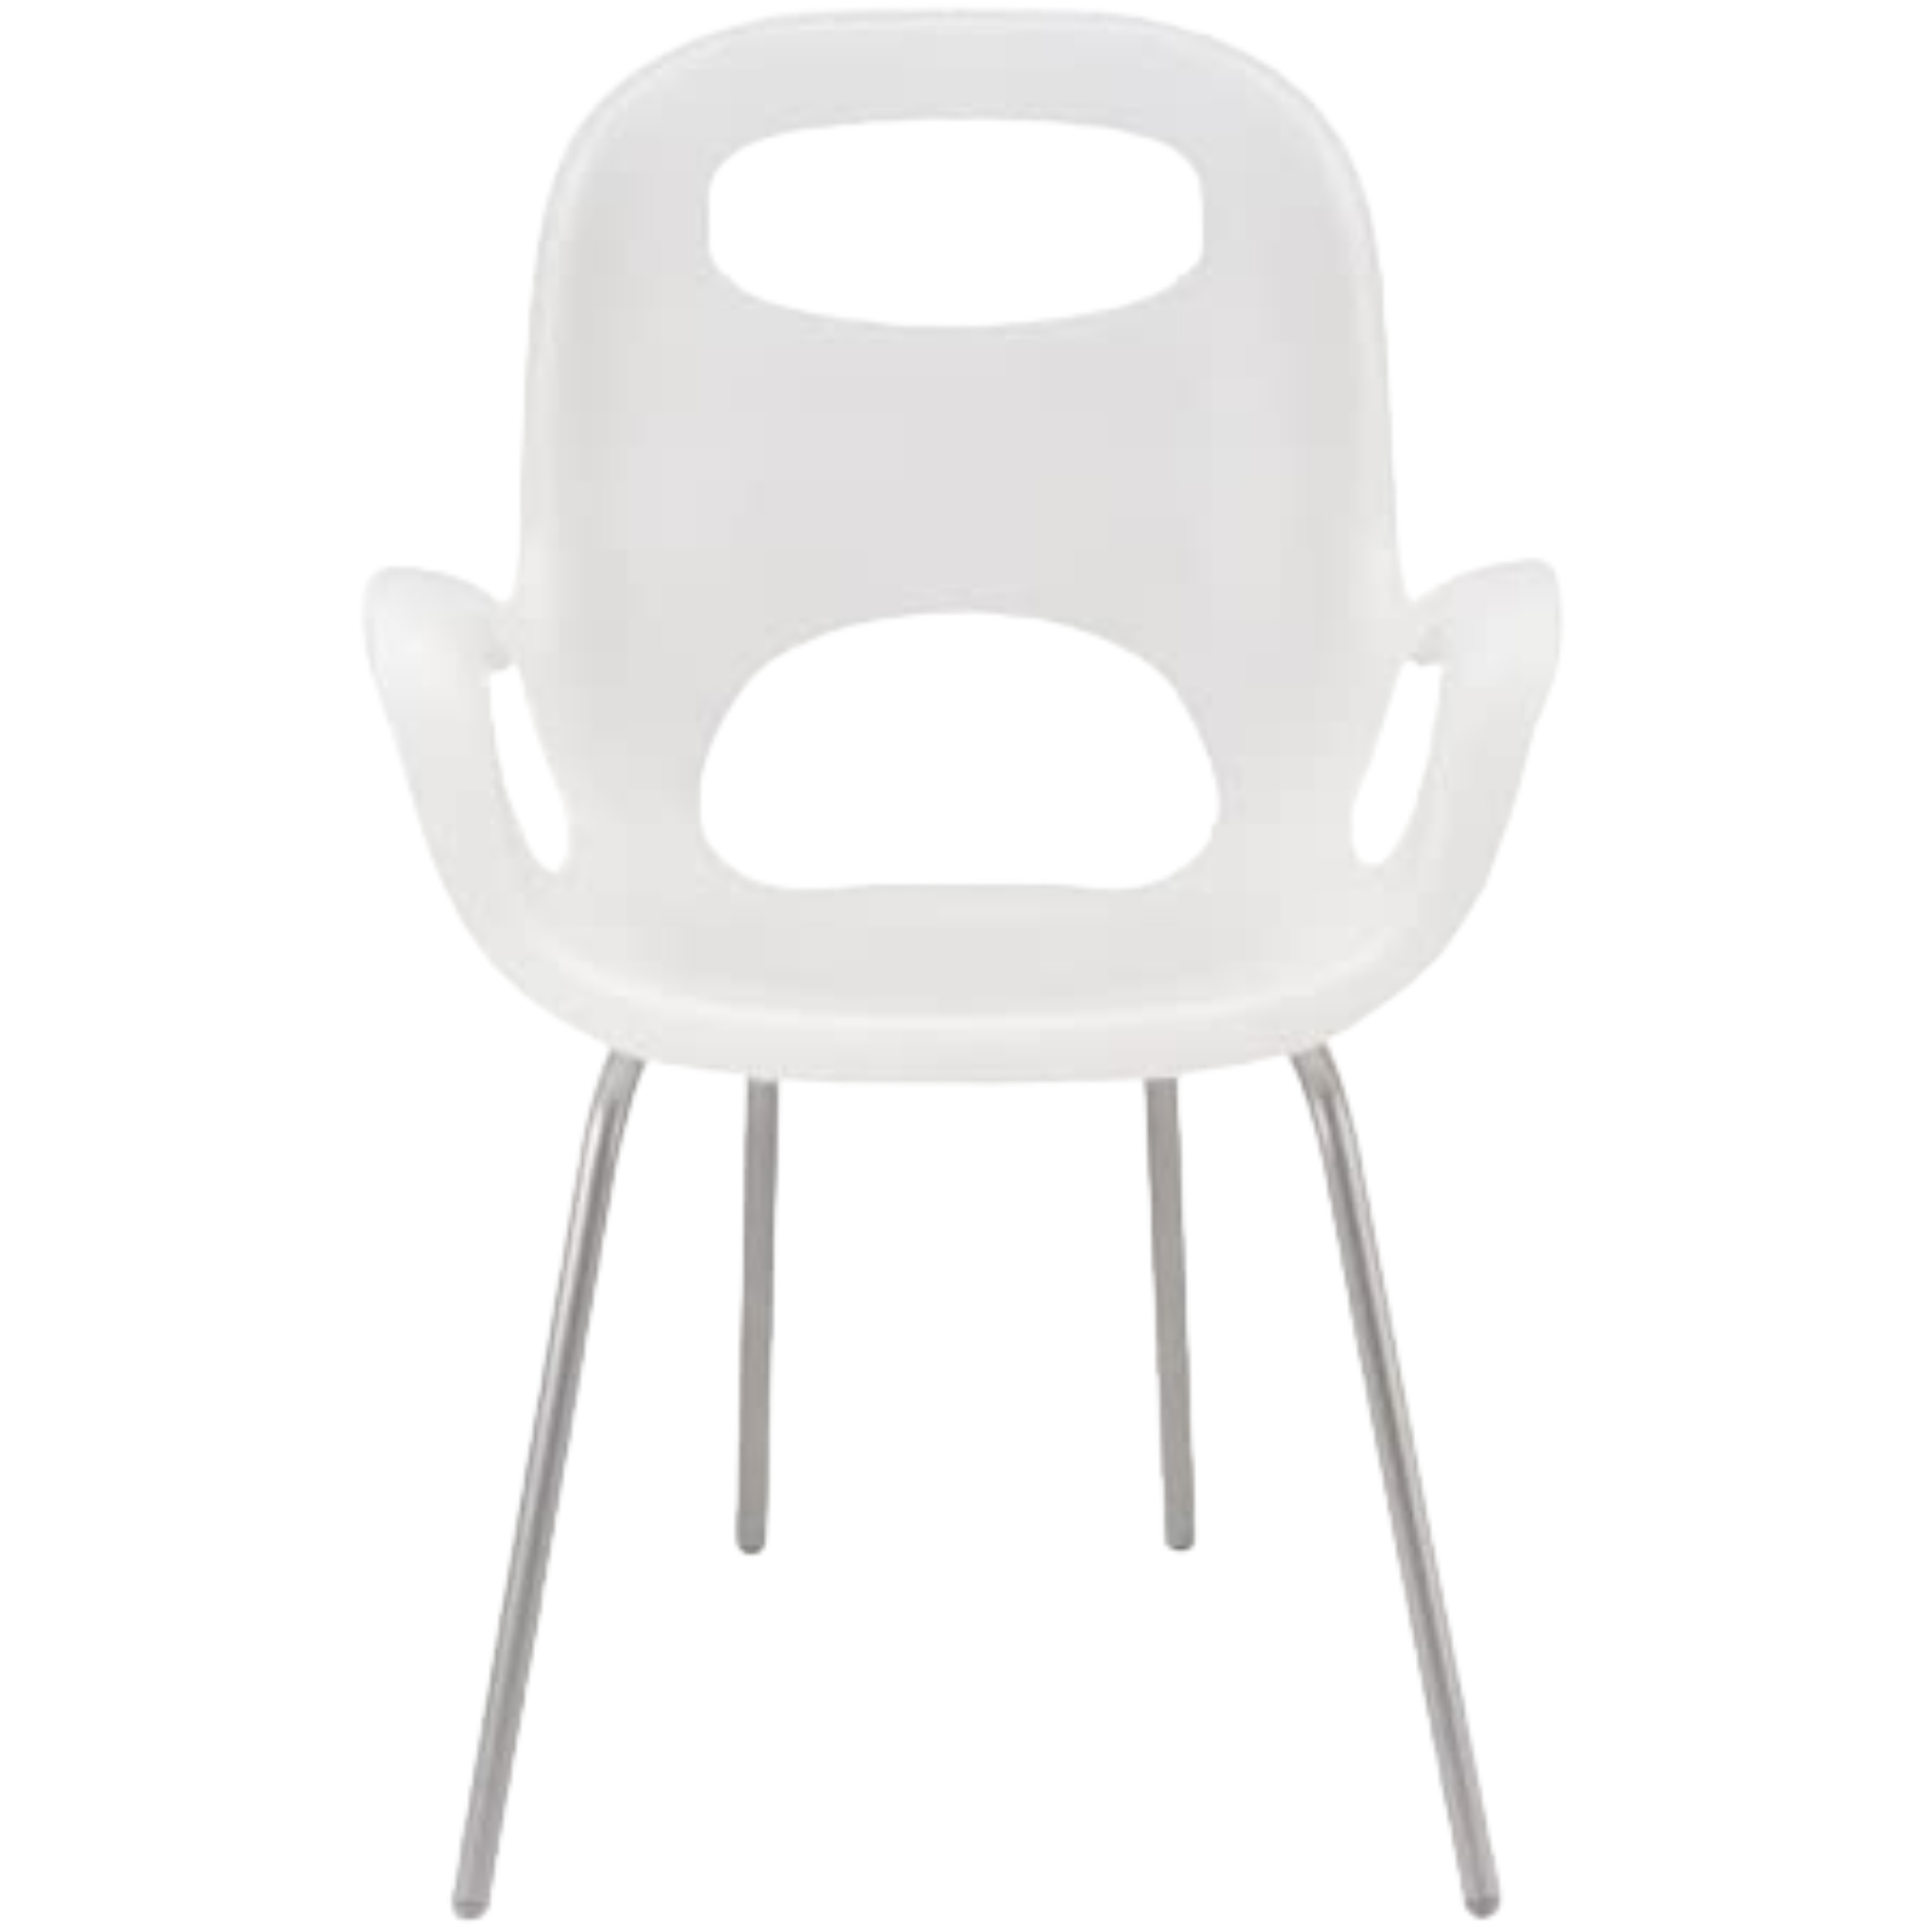 Umbra OH Chair - Translucent White - Pro-Distributing